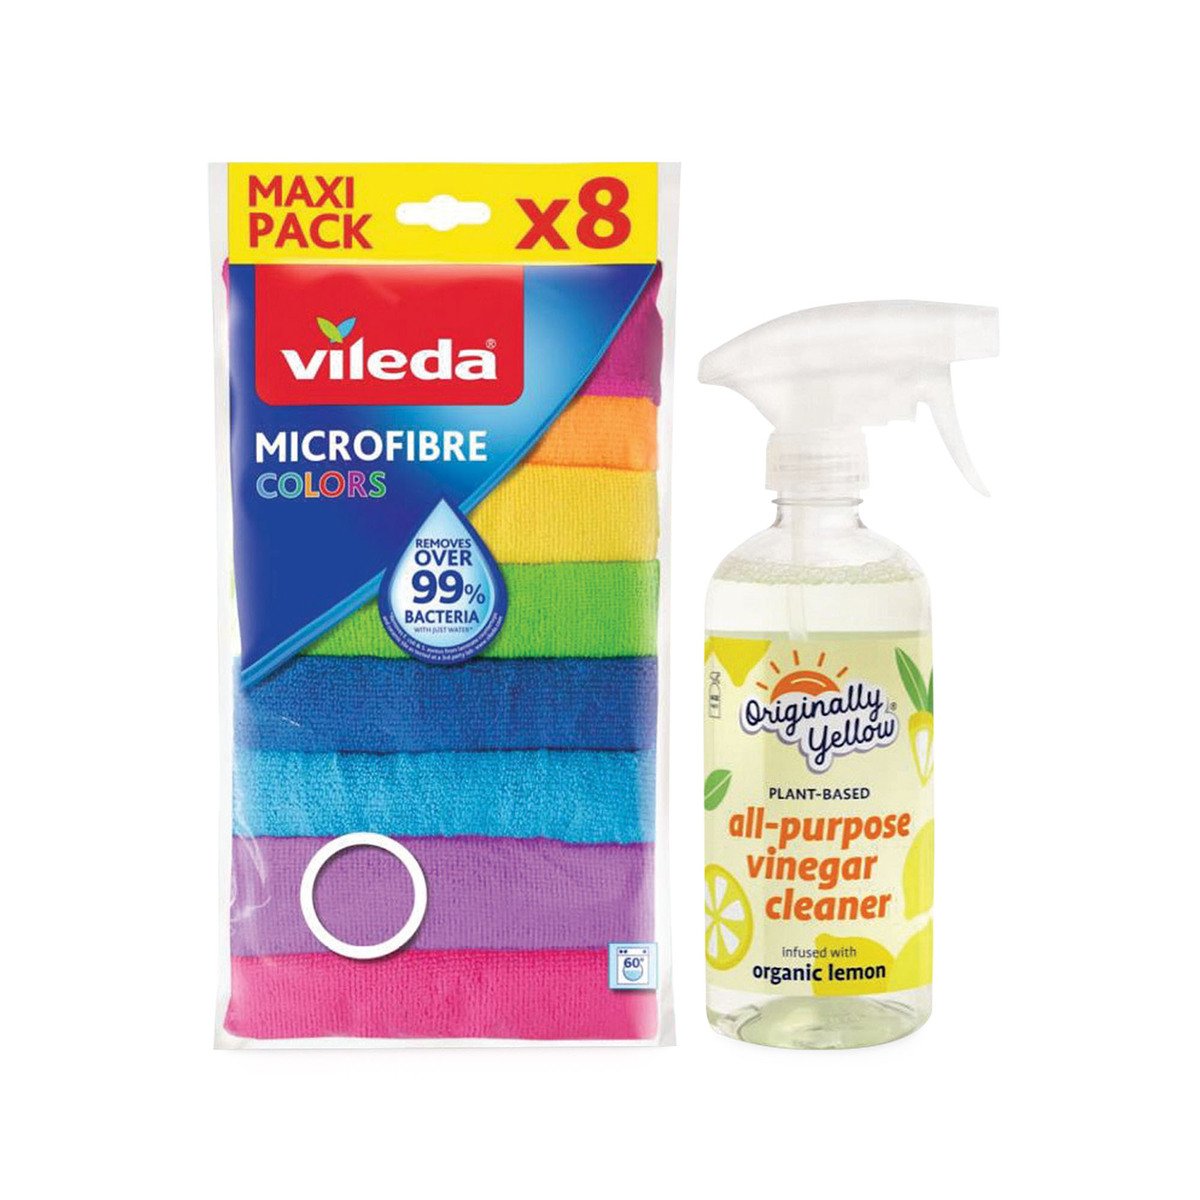 Vileda Microfiber Colors Cloth 8 pcs + All Purpose Vinegar Cleaner 470 ml